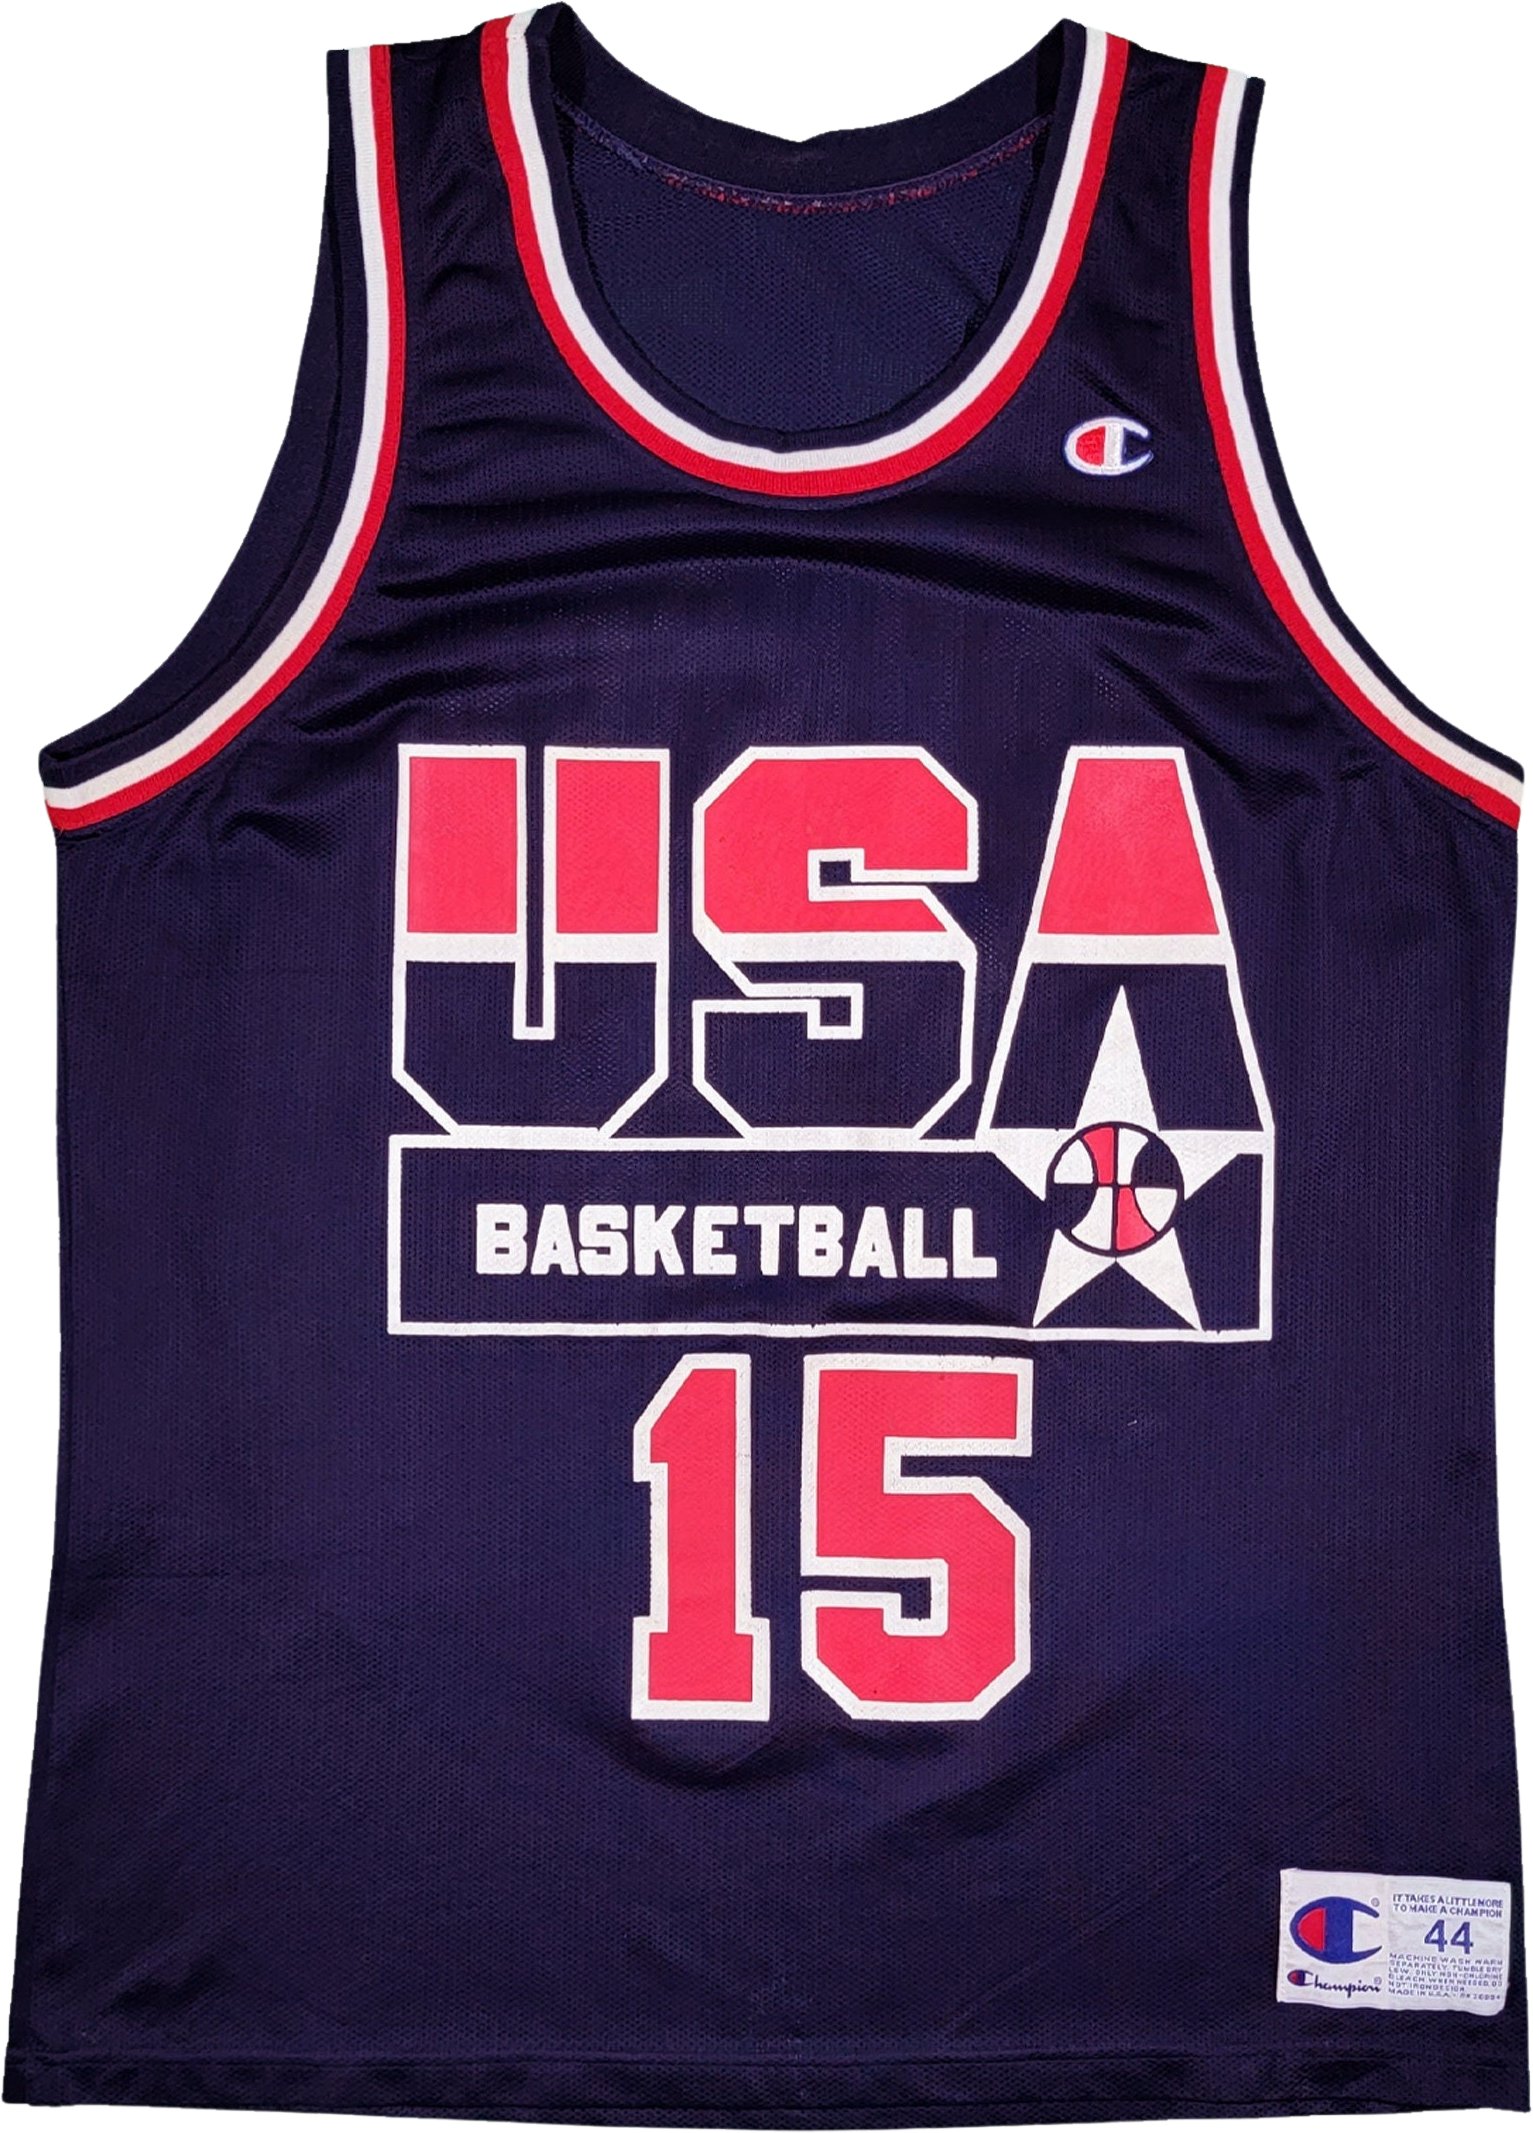 HolySport Chicago Bulls Vintage 90s Starter Reversible Basketball Jersey - NBA Uniform Shirt - Authentic Product - Size Extra Large 